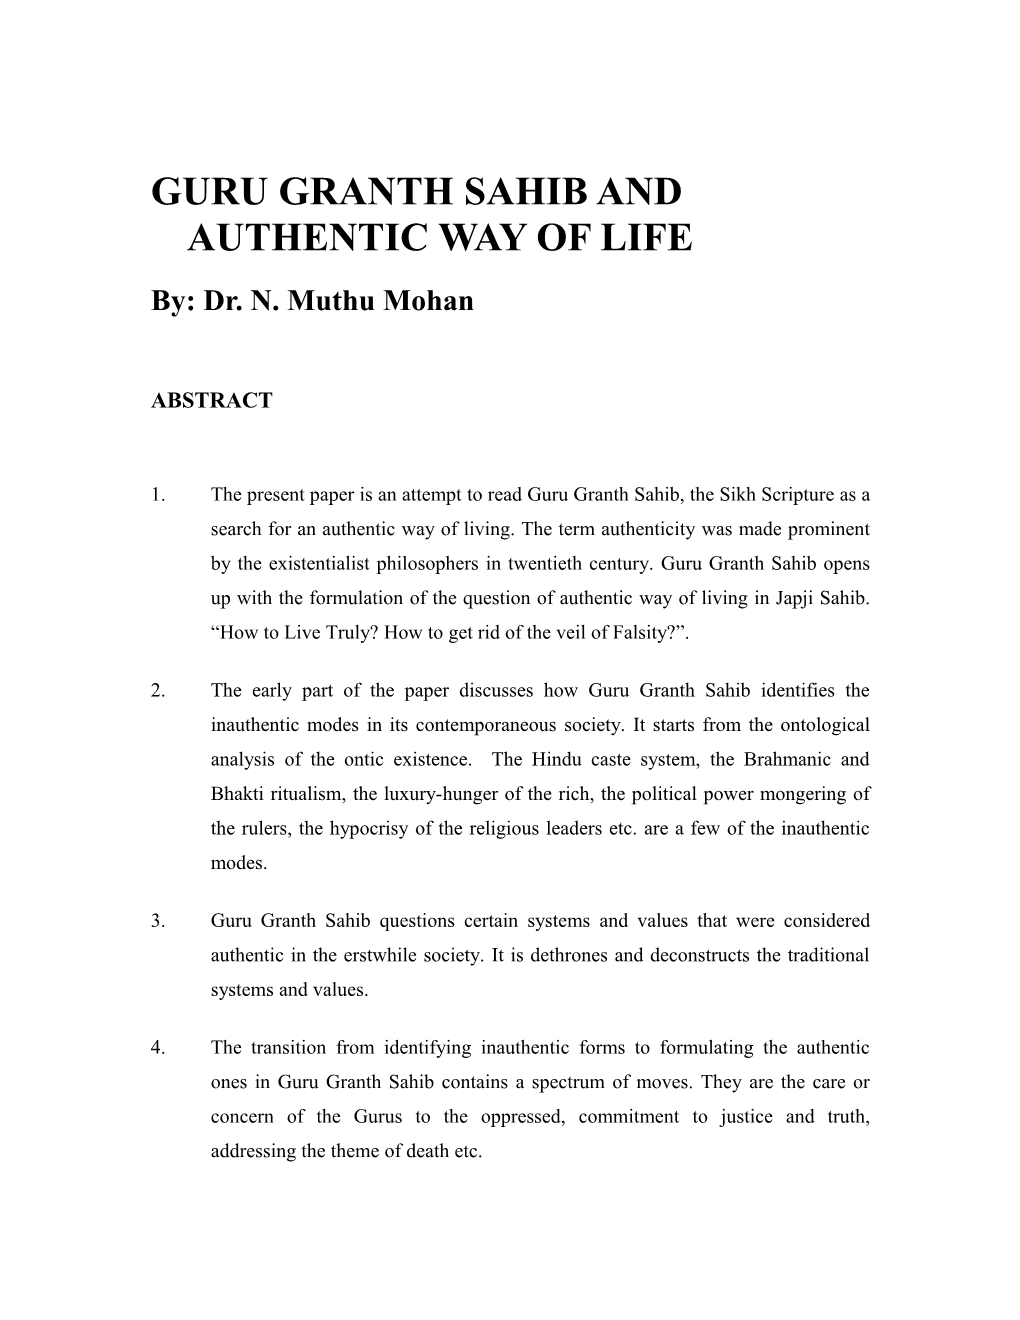 Guru Granth Sahib and Authentic Way of Life